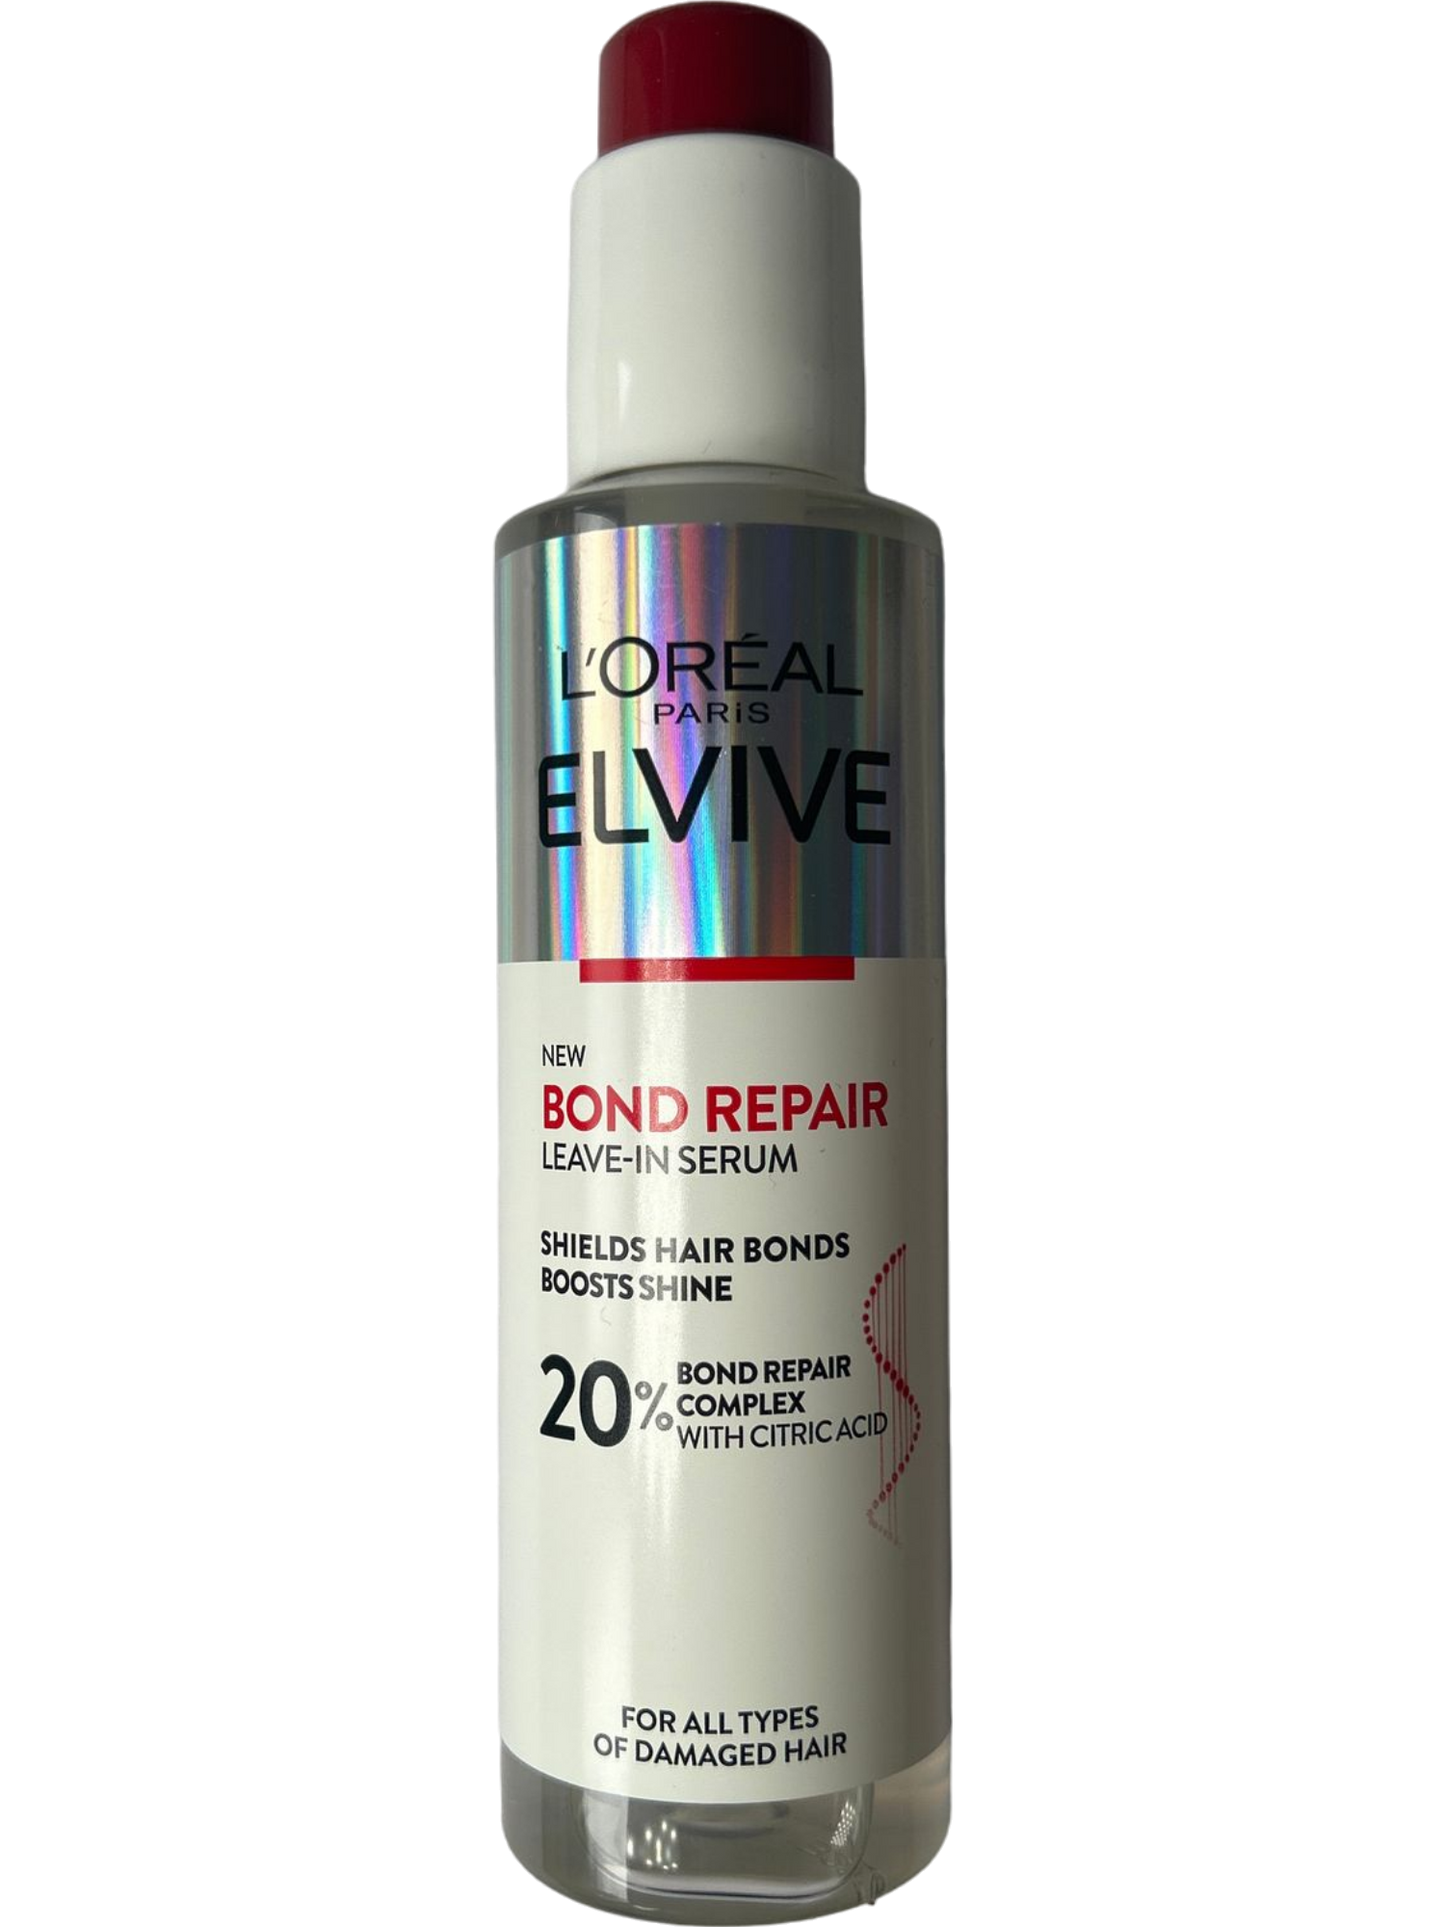 L'Oreal Elvive Bond Repair Leave-In Serum Hair Treatment 150ml